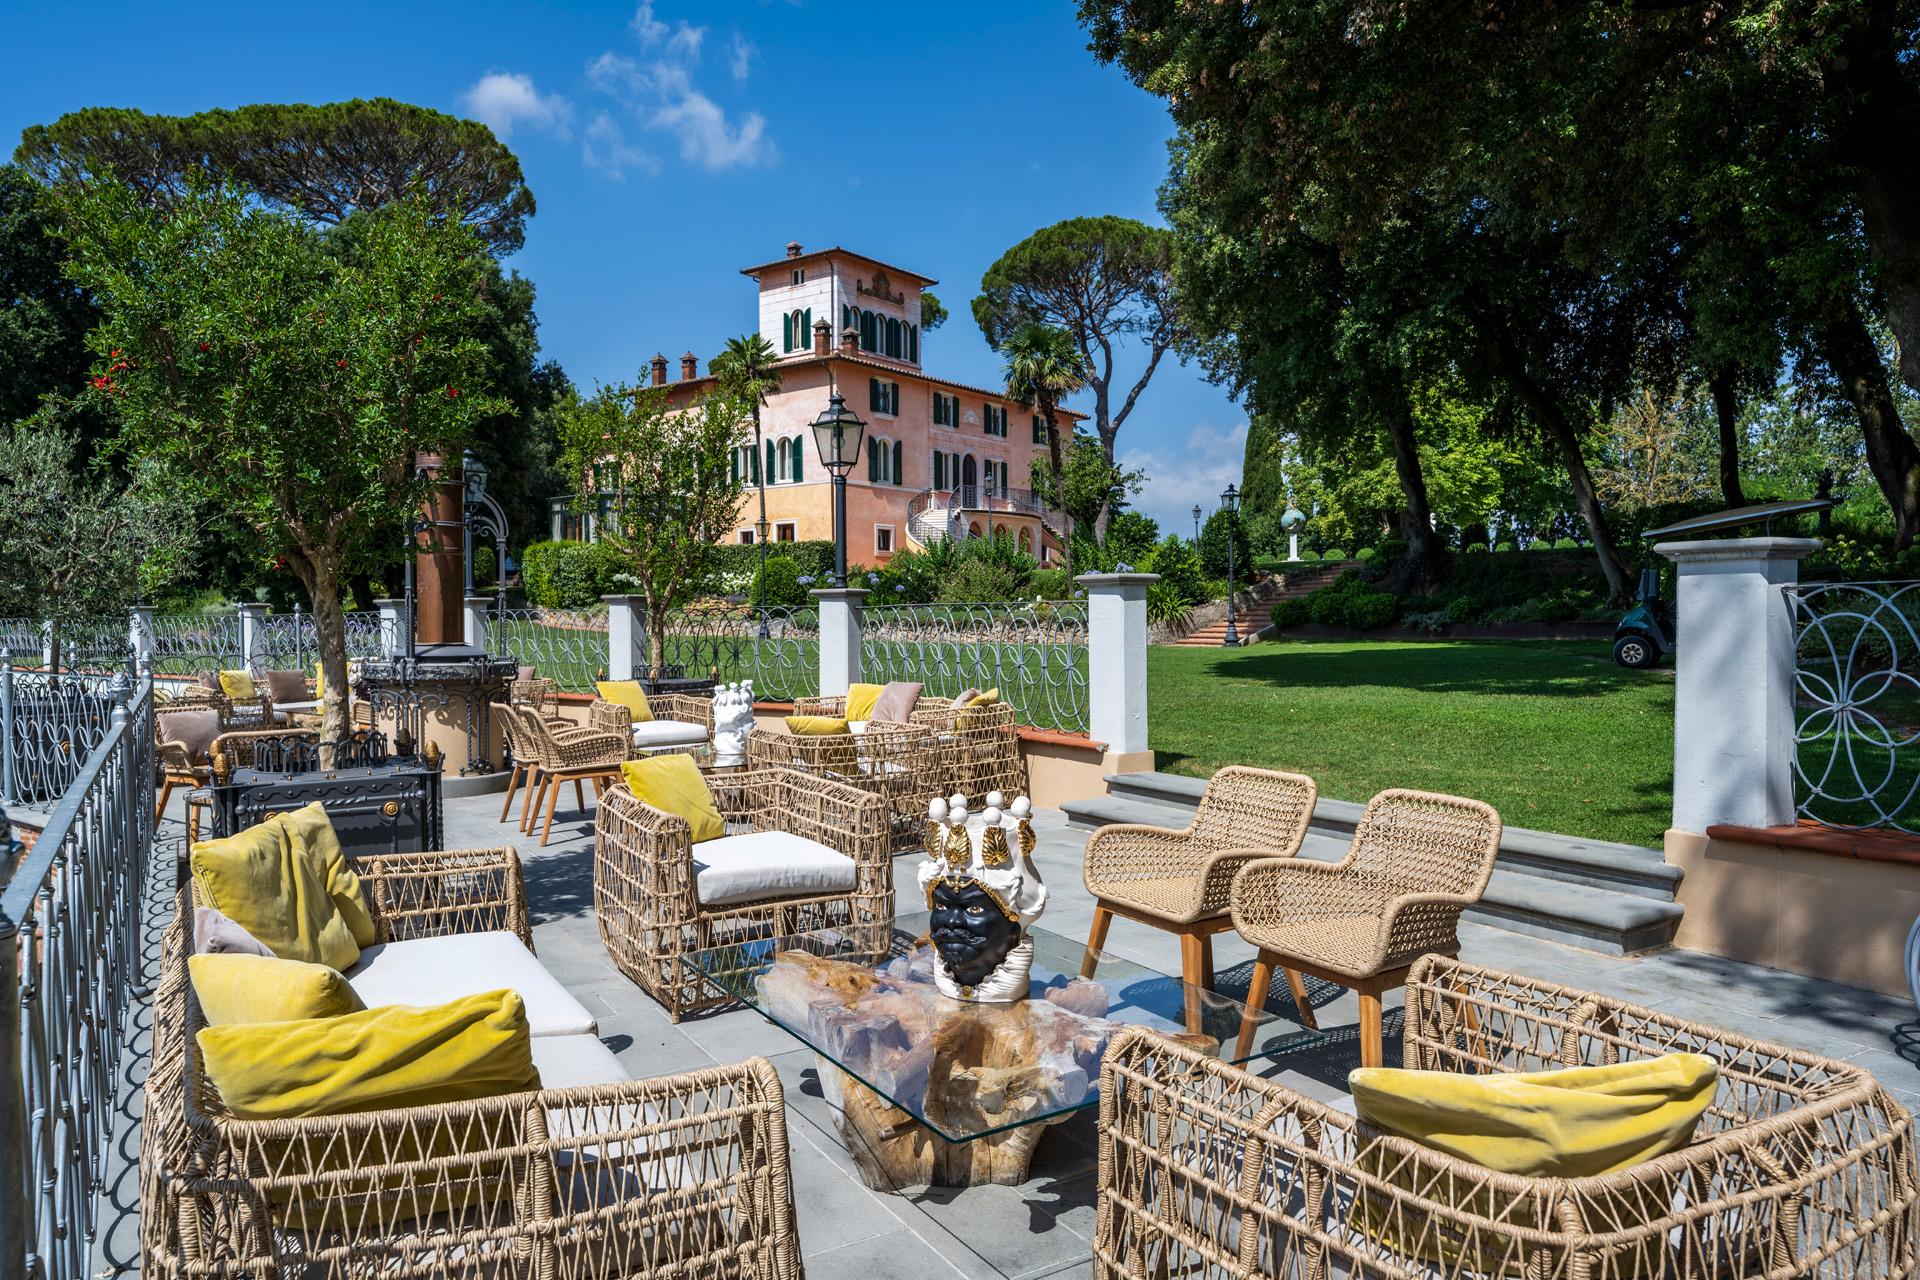 Villa with outdoor and indoor spaces for ceremonies, weddings & events